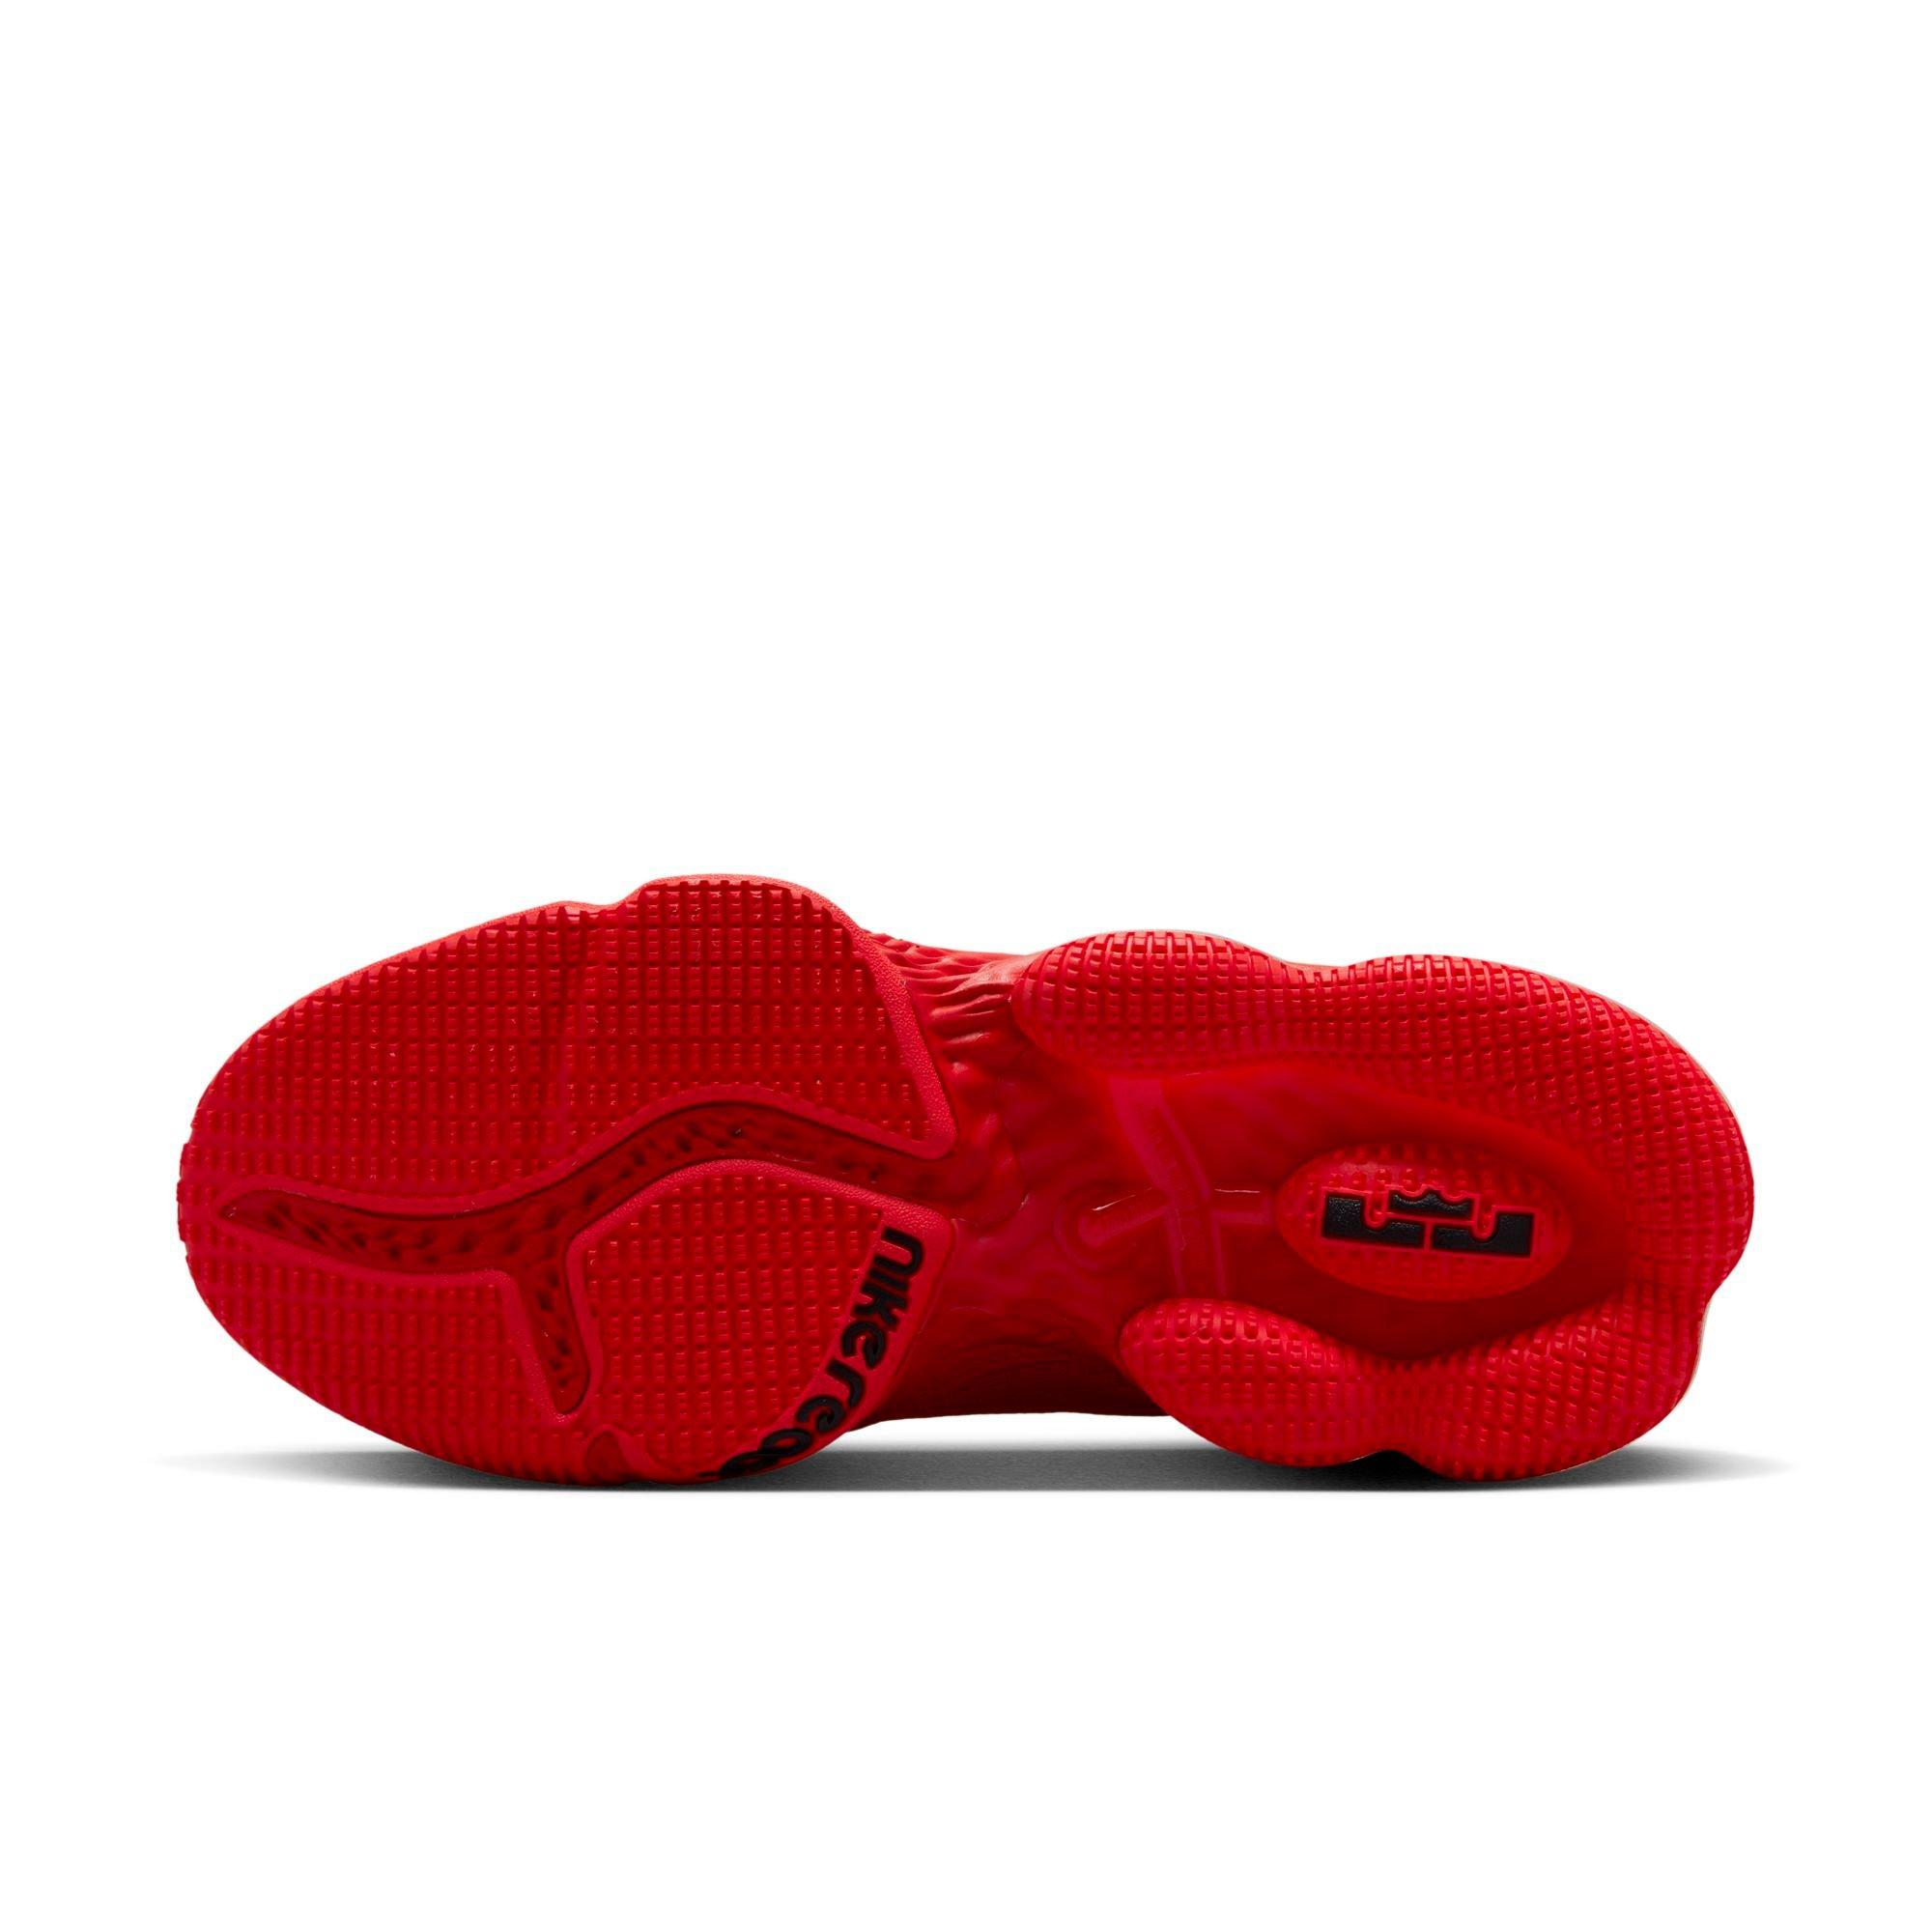 Nike LeBron 19 Low Light Crimson Basketball Shoes, Red/Black, Size: 10.5